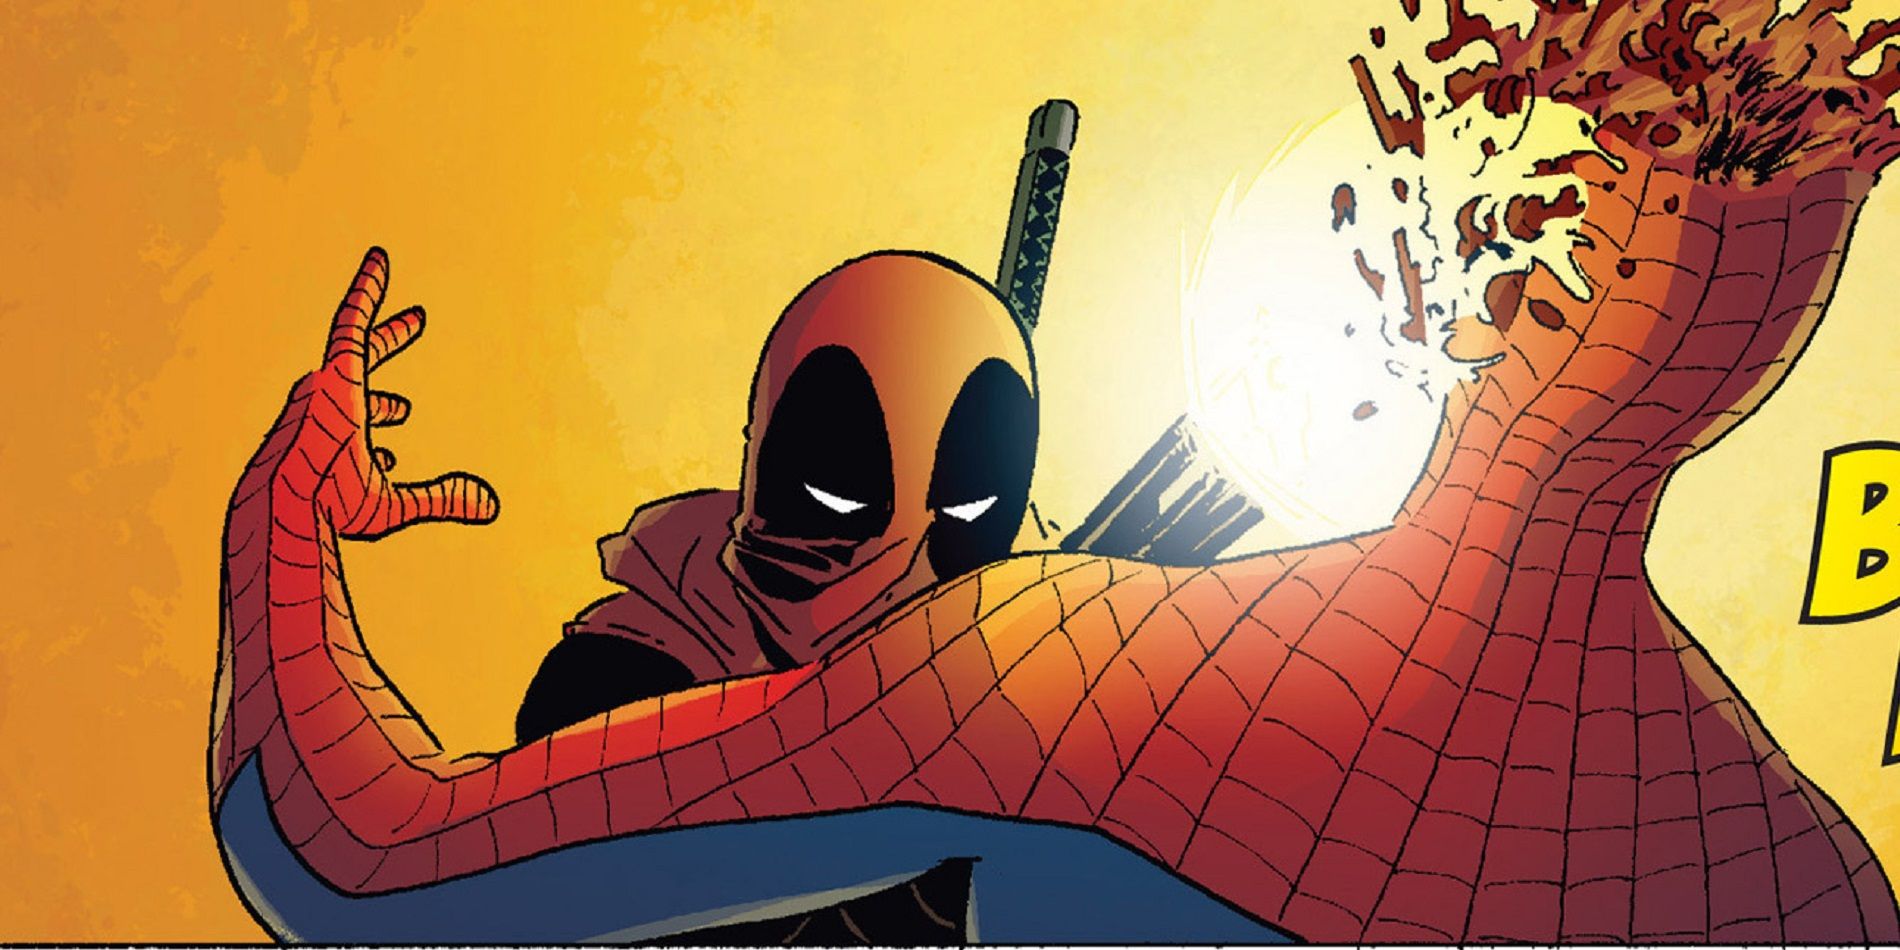 Deadpool shoots Spider-Man